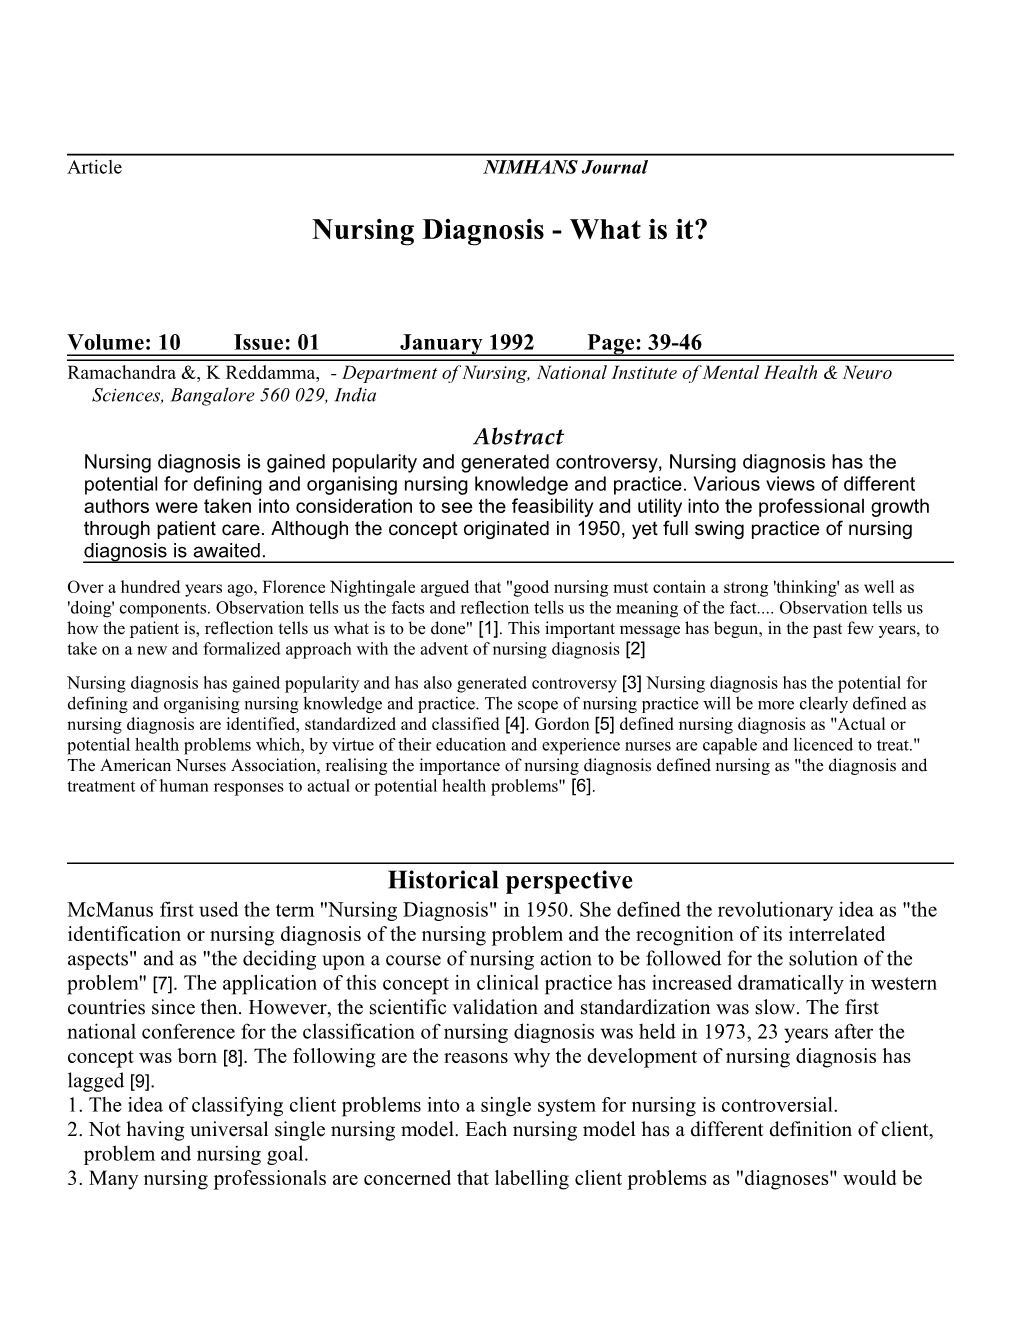 Nursing Diagnosis - What Is It?